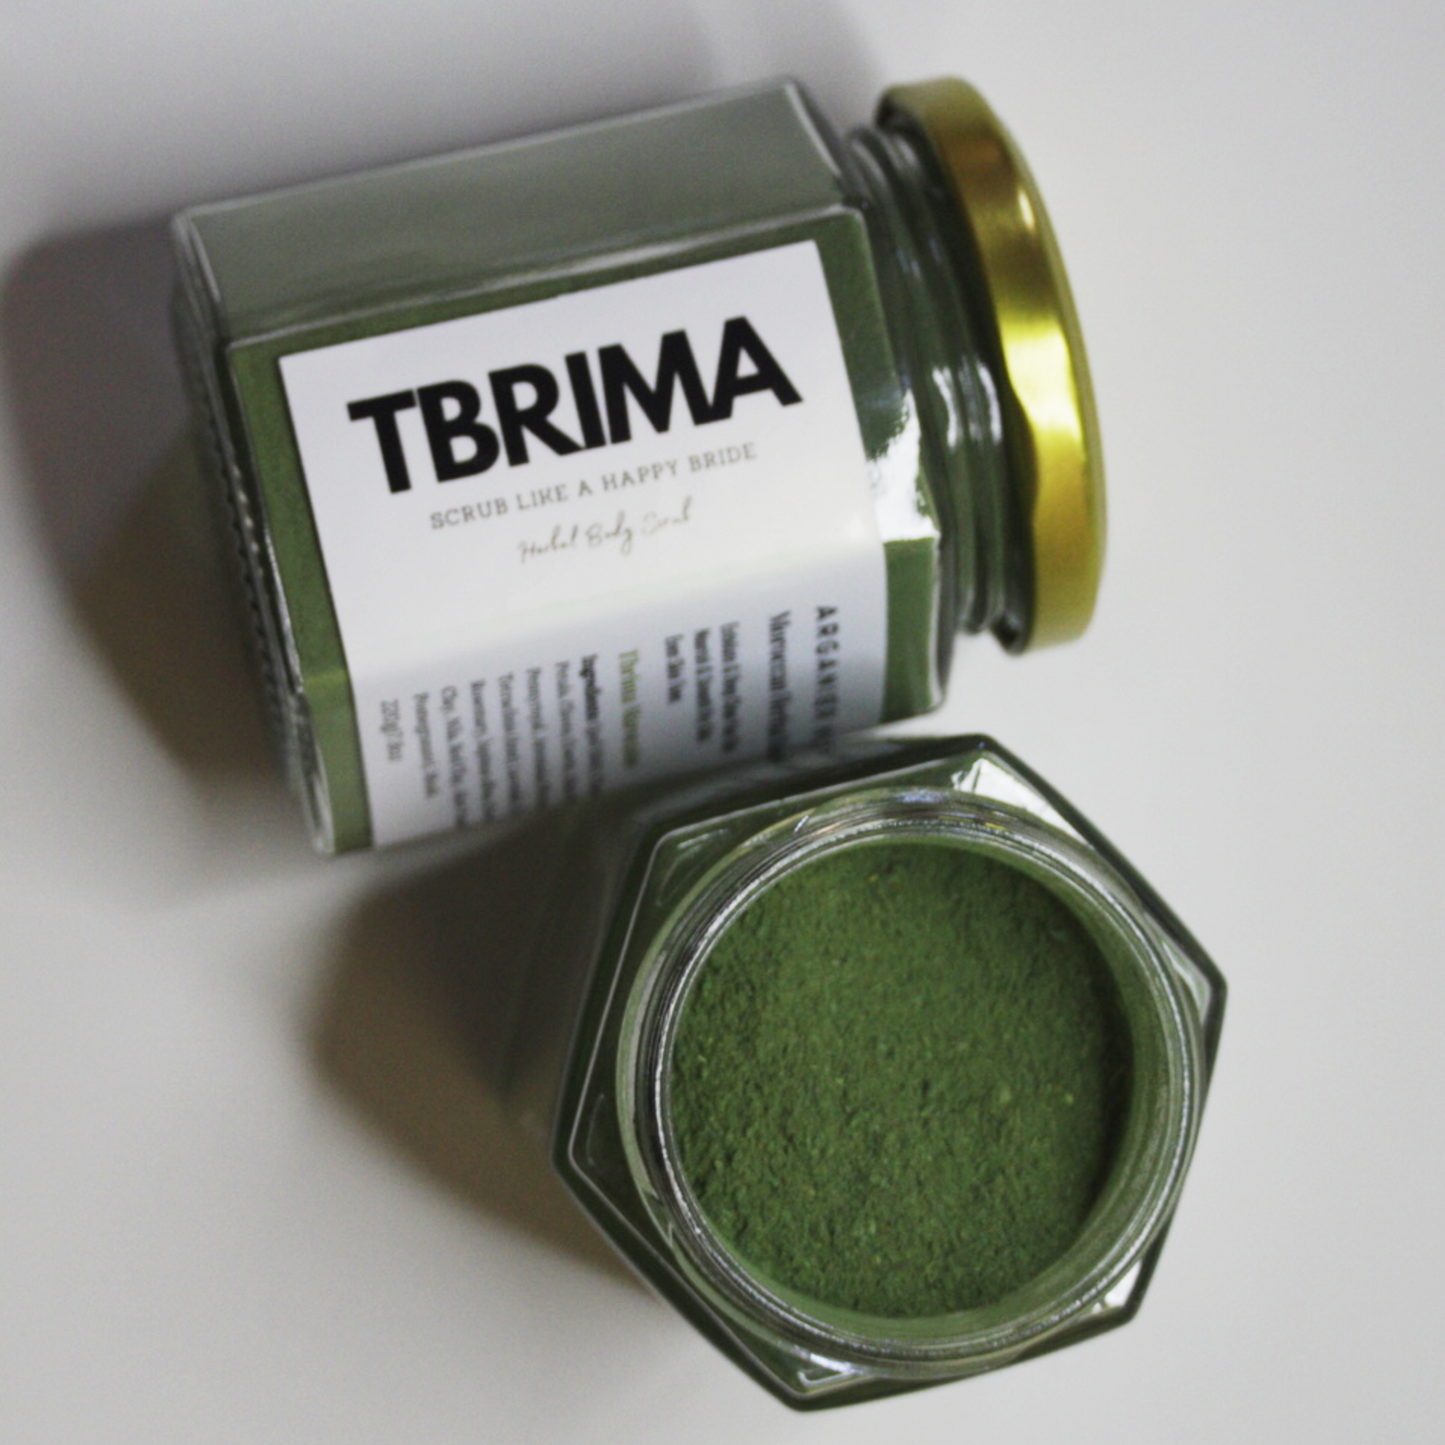 Tbrima- Herbal Detox Body Scrub